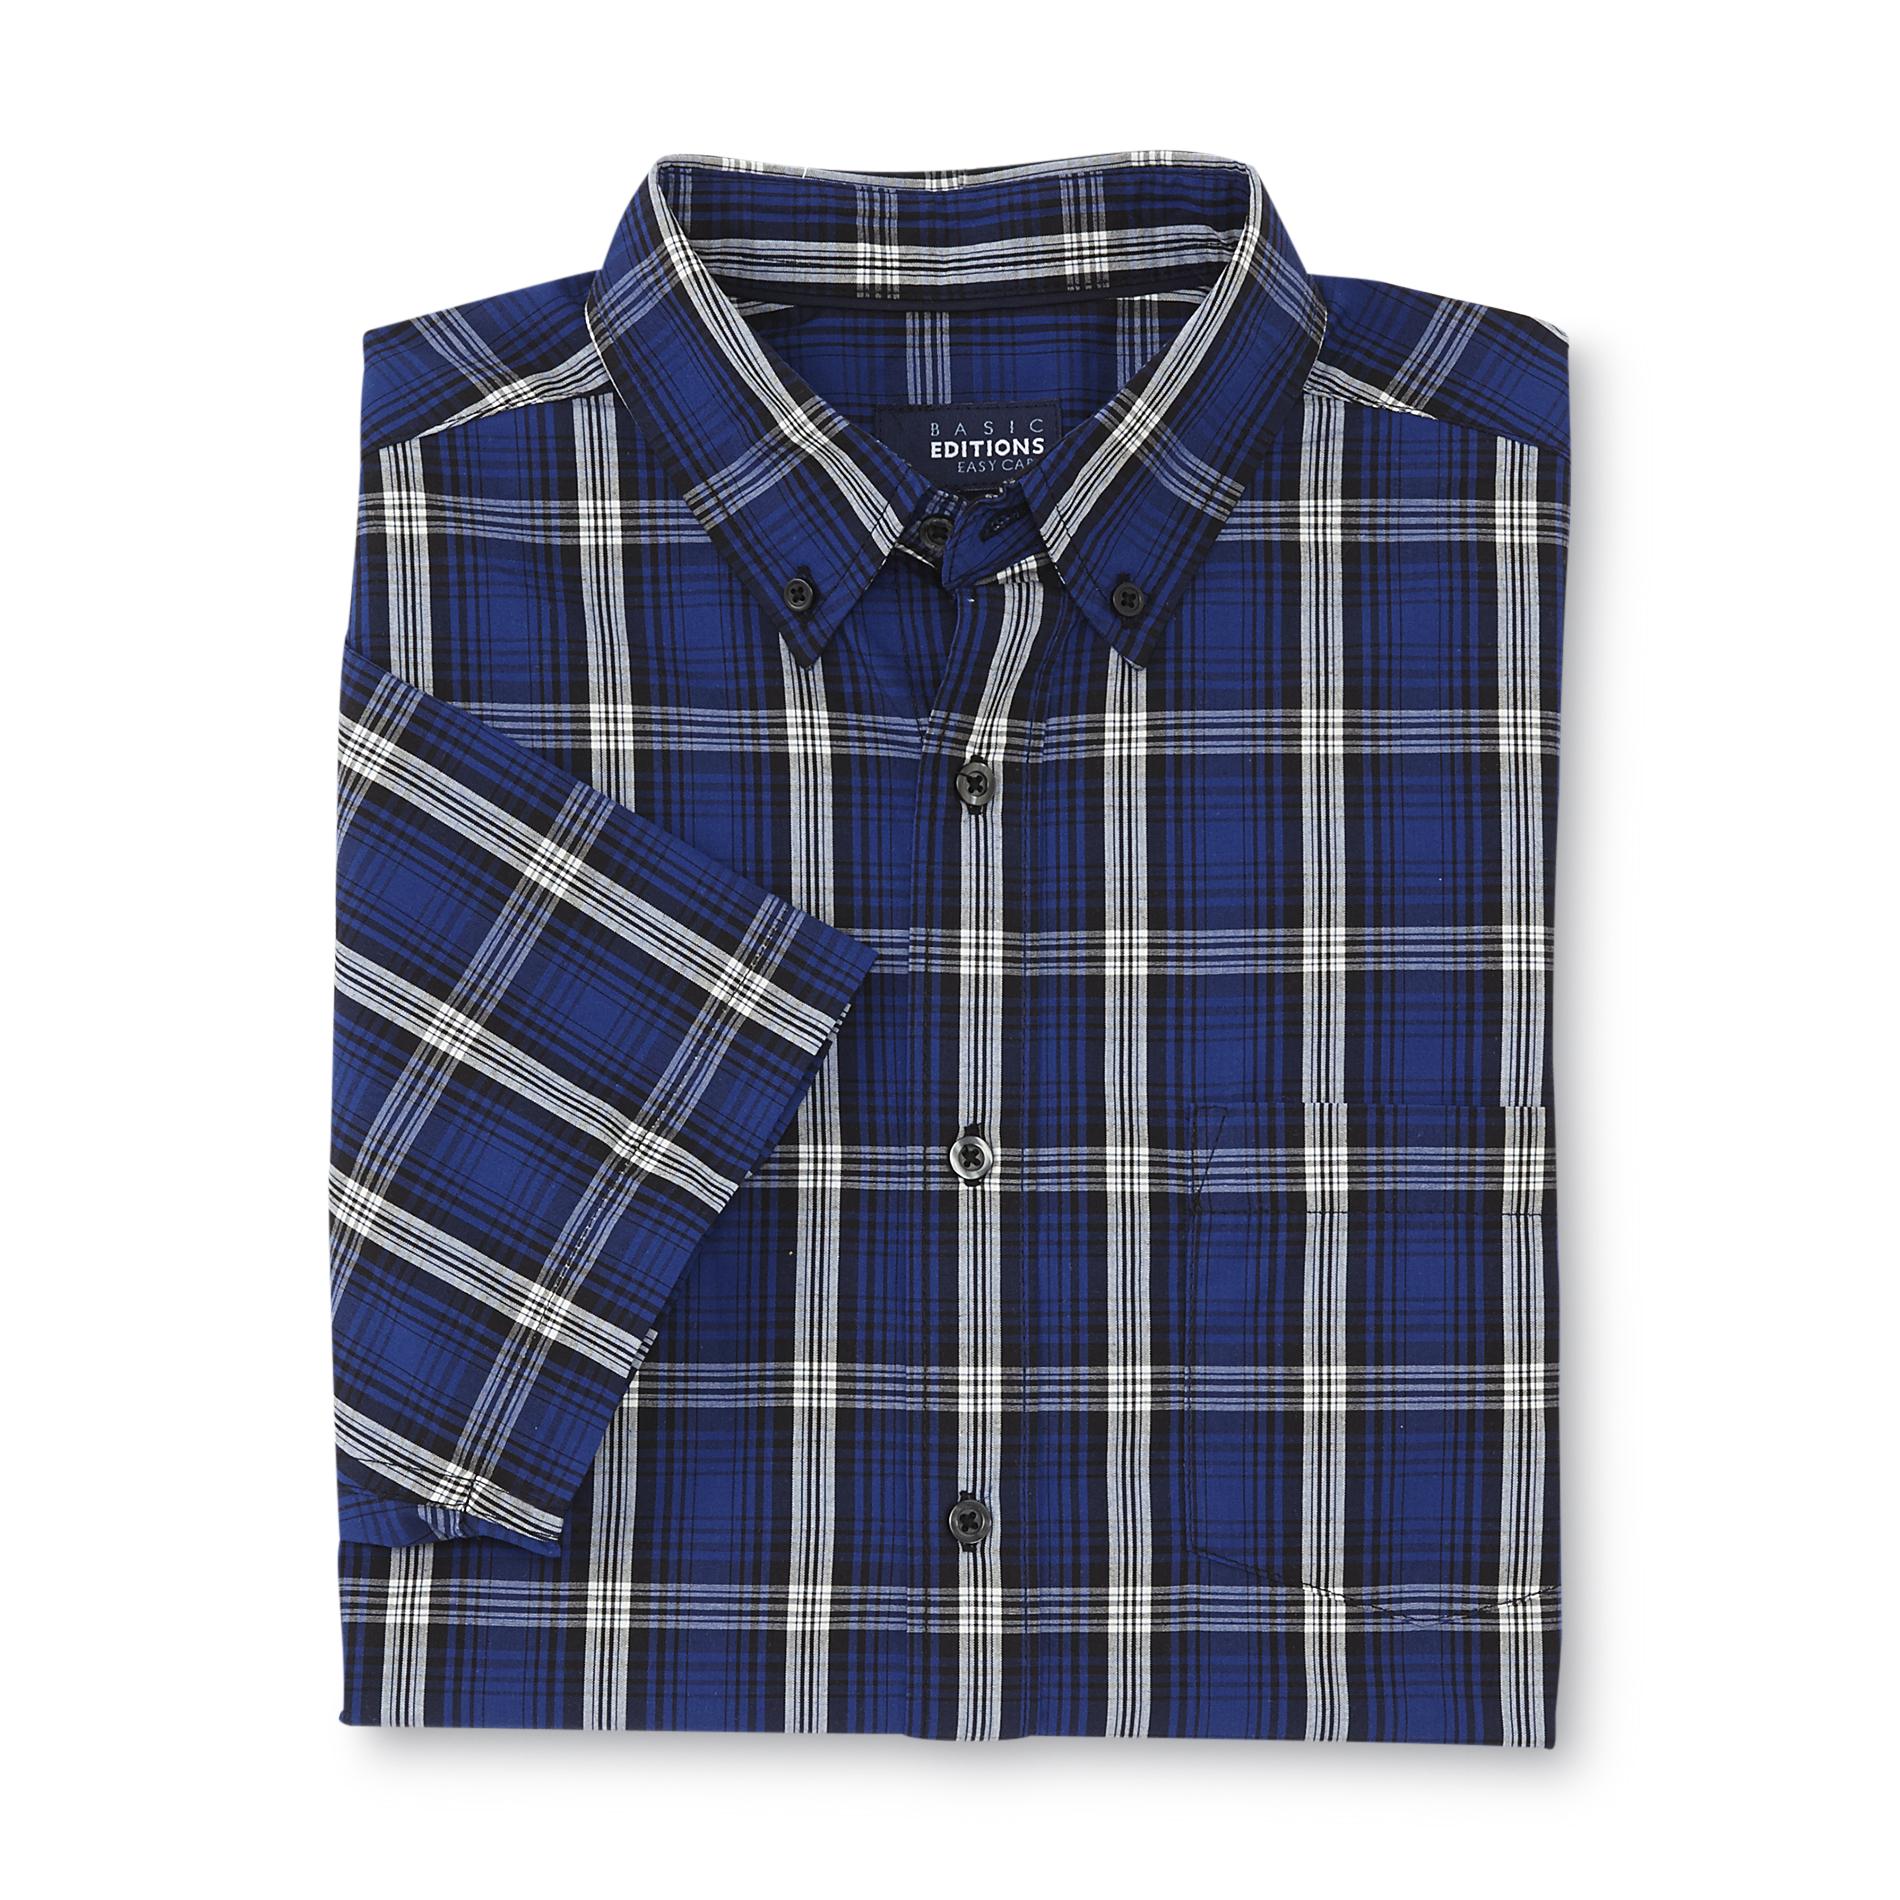 Basic Editions Men's Short-Sleeve Dress Shirt - Plaid